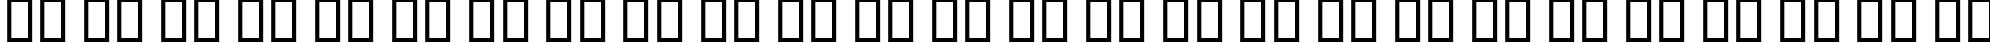 Пример написания английского алфавита шрифтом B Shadi